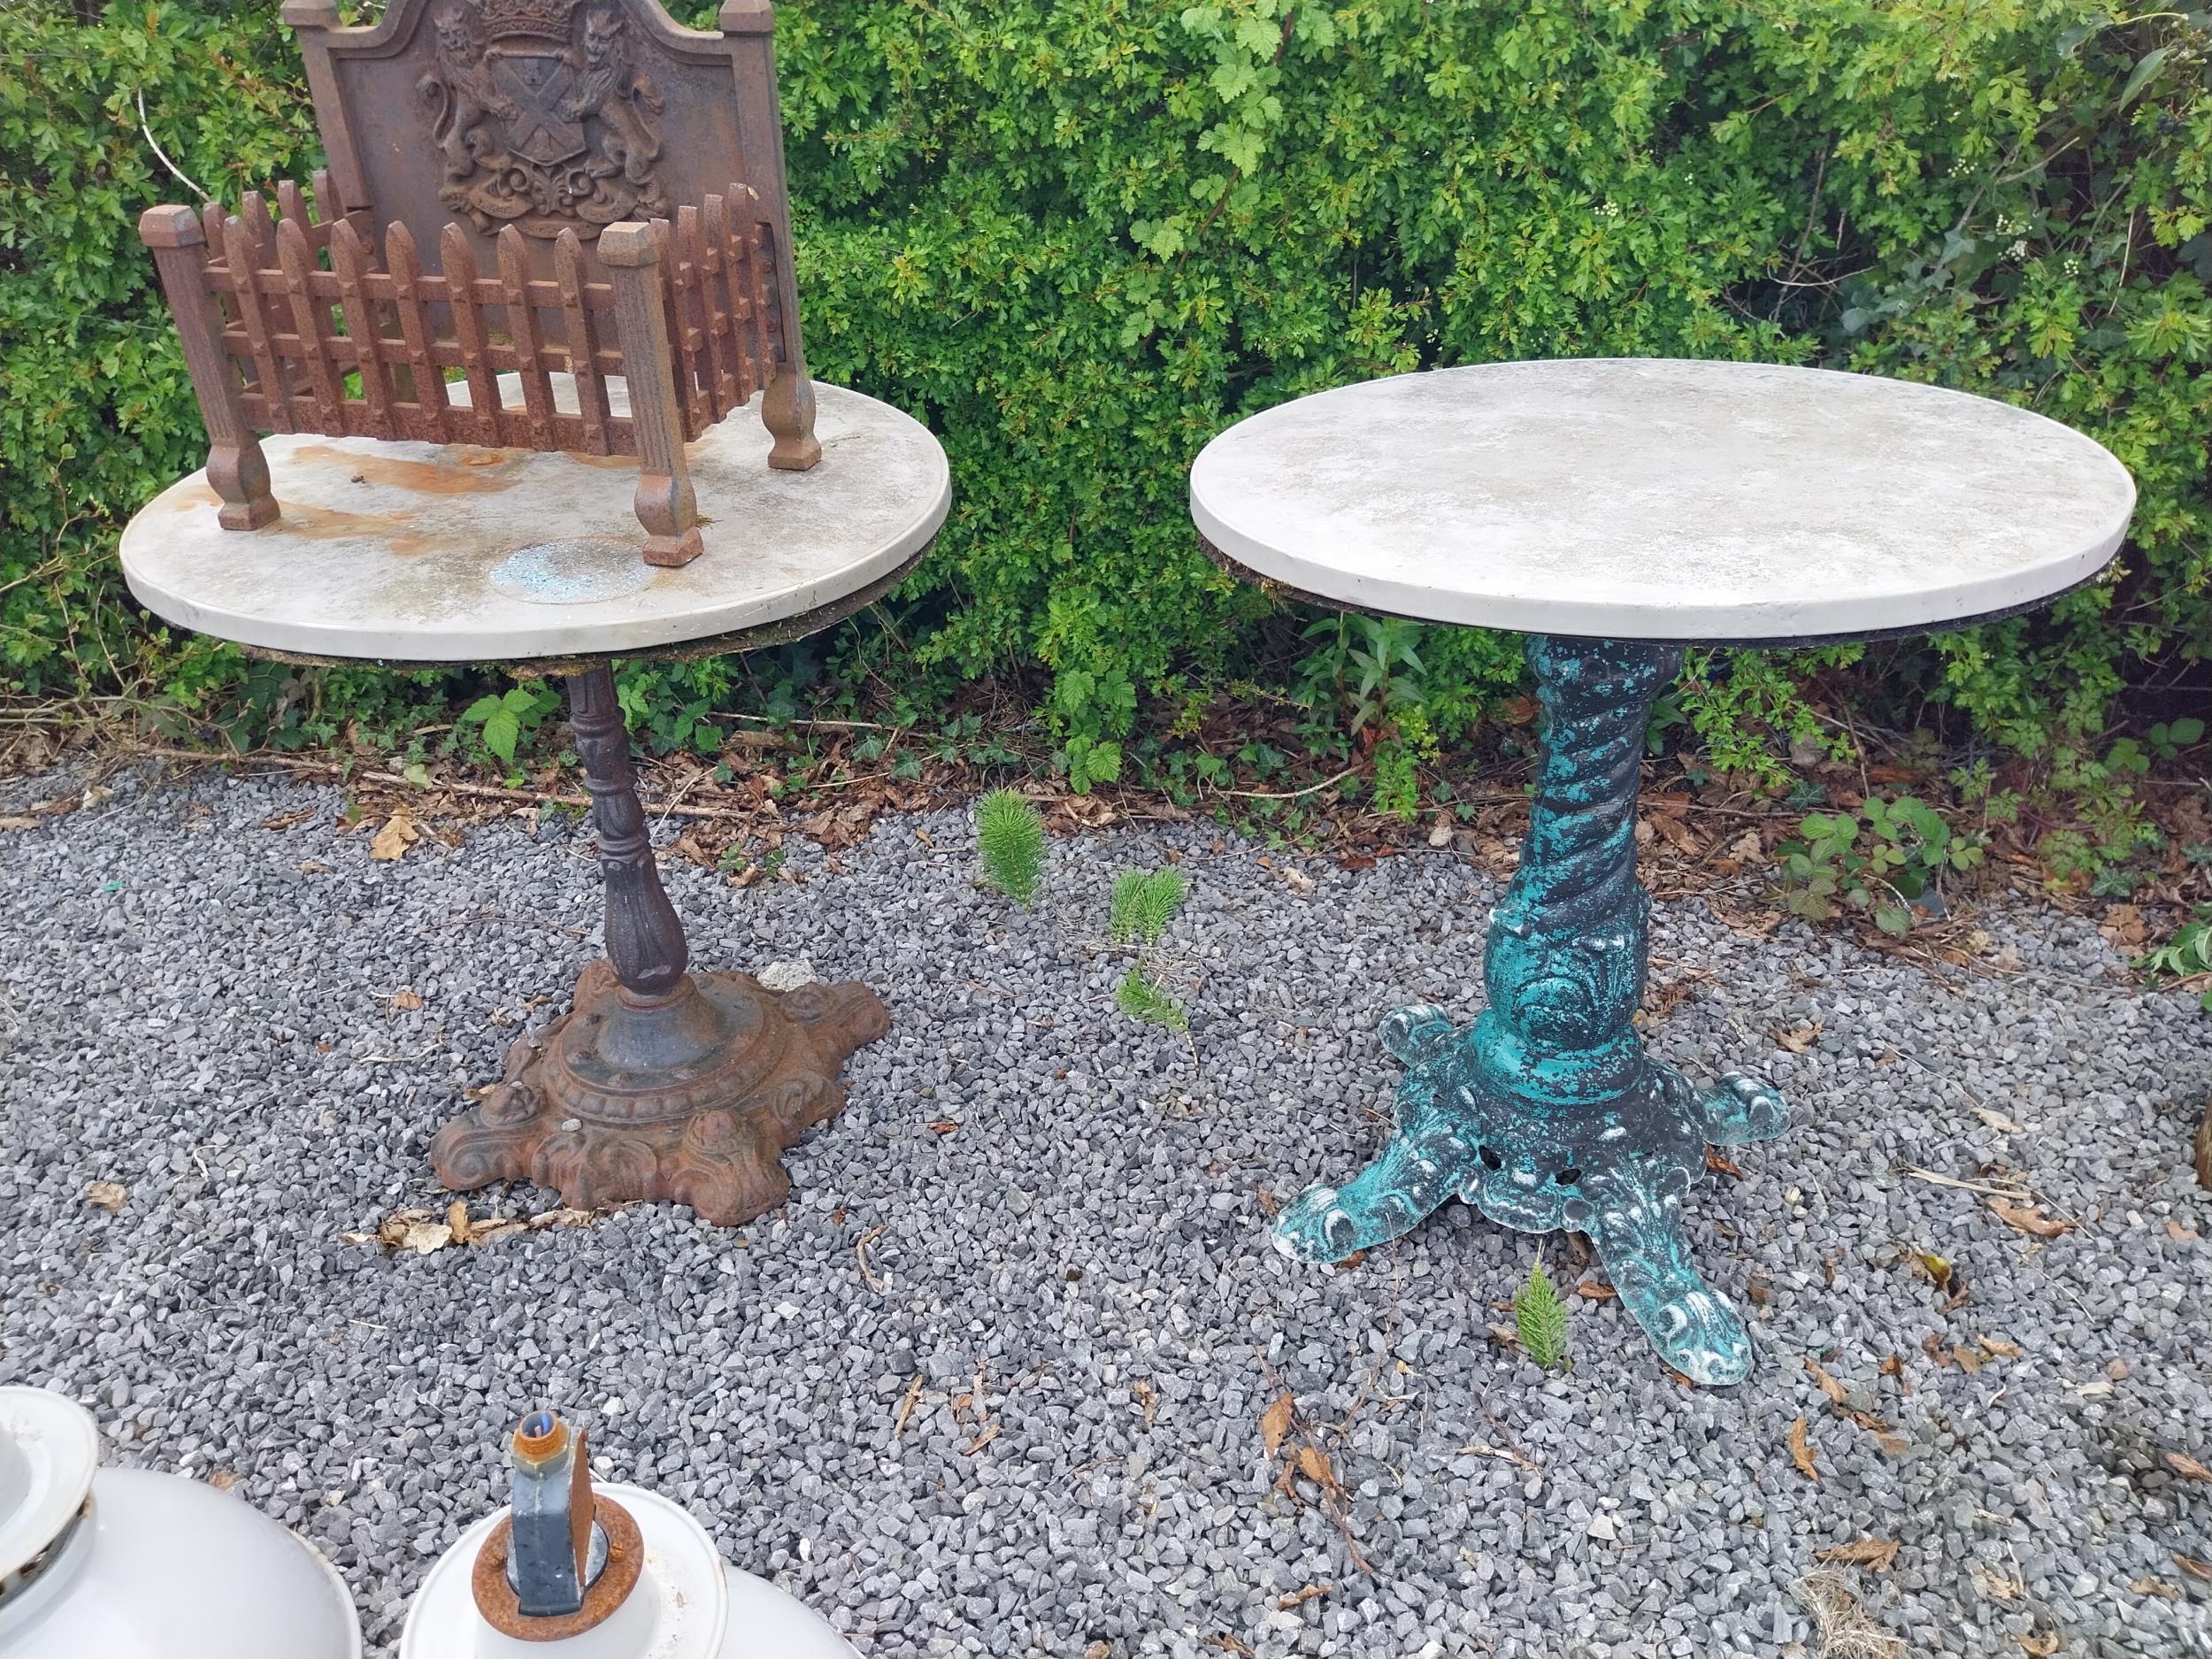 Two cast iron garden tables with zinc tops {74 cm H x 70 cm Dia. and 79 cm H x 70 cm Dia.}.